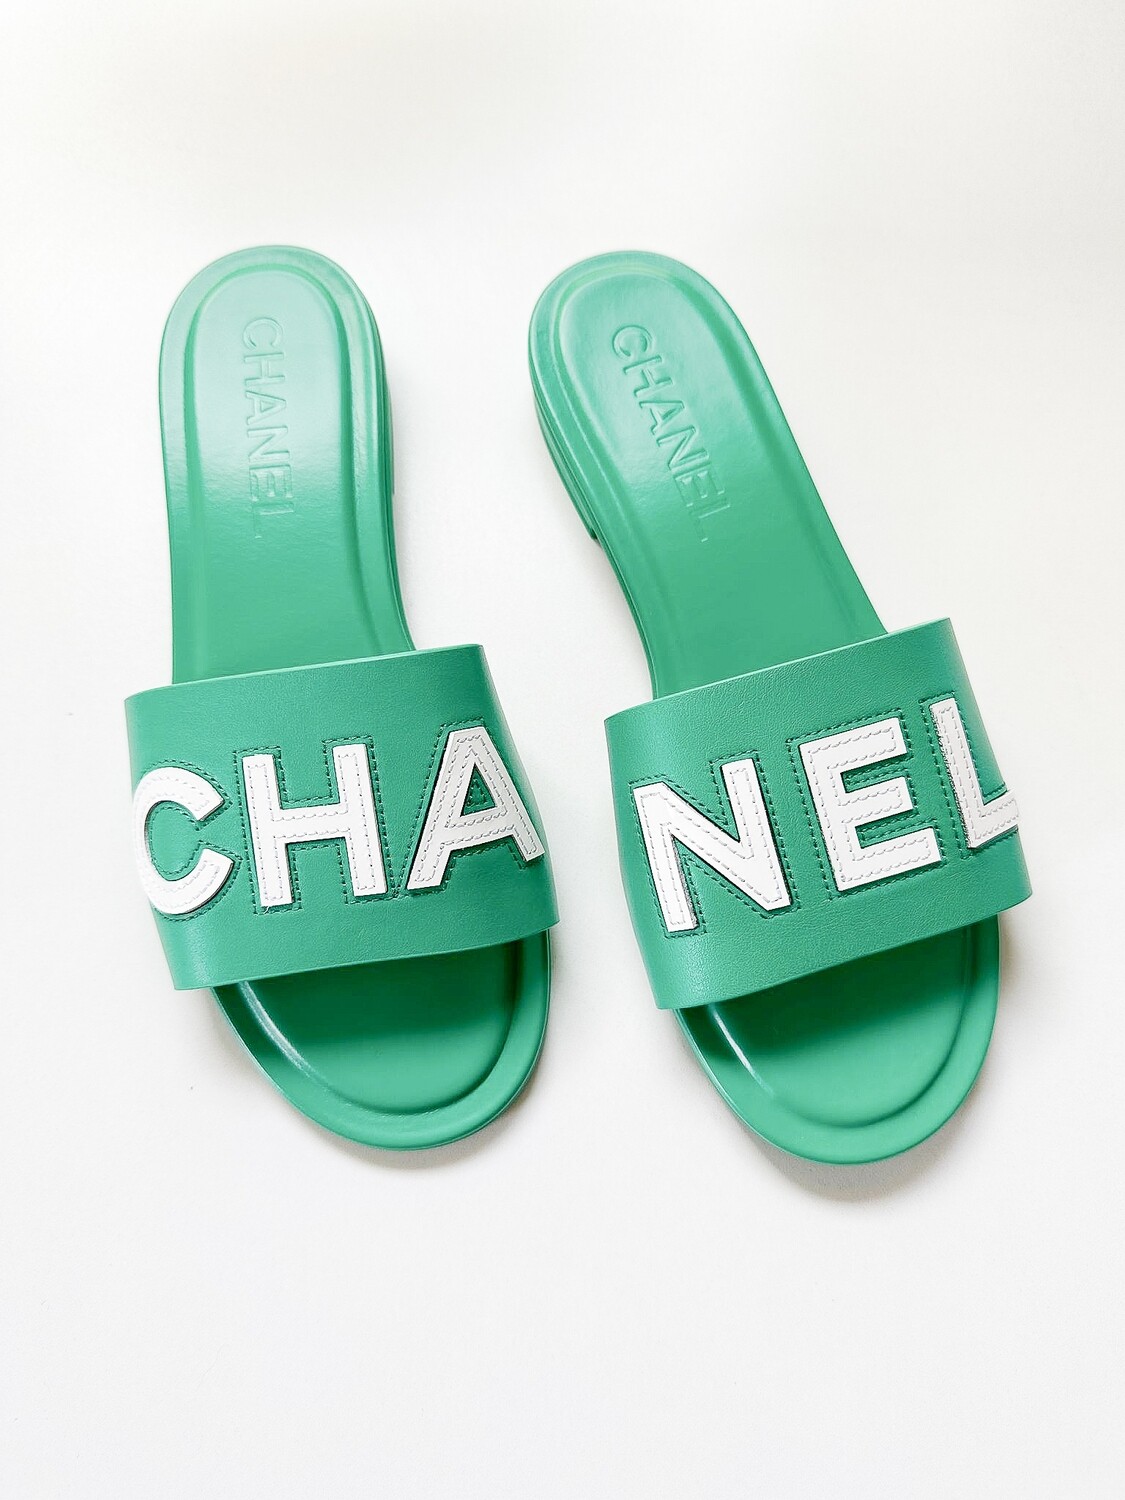 Chanel Slide Sandals, Green and White, Size 38, New in Box GA003 - Julia  Rose Boston | Shop